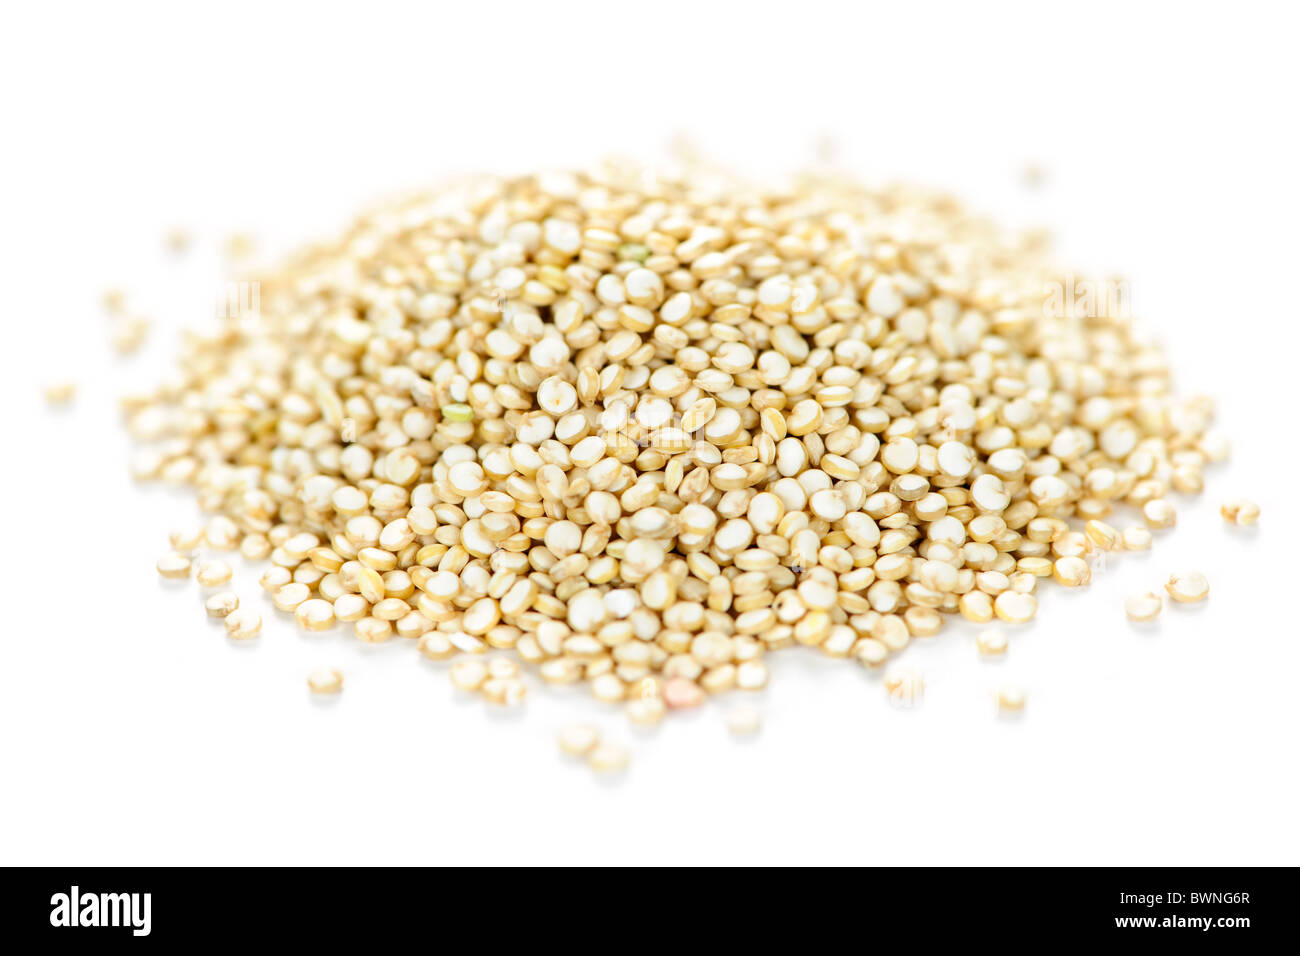 Pile of quinoa grain on white background Stock Photo